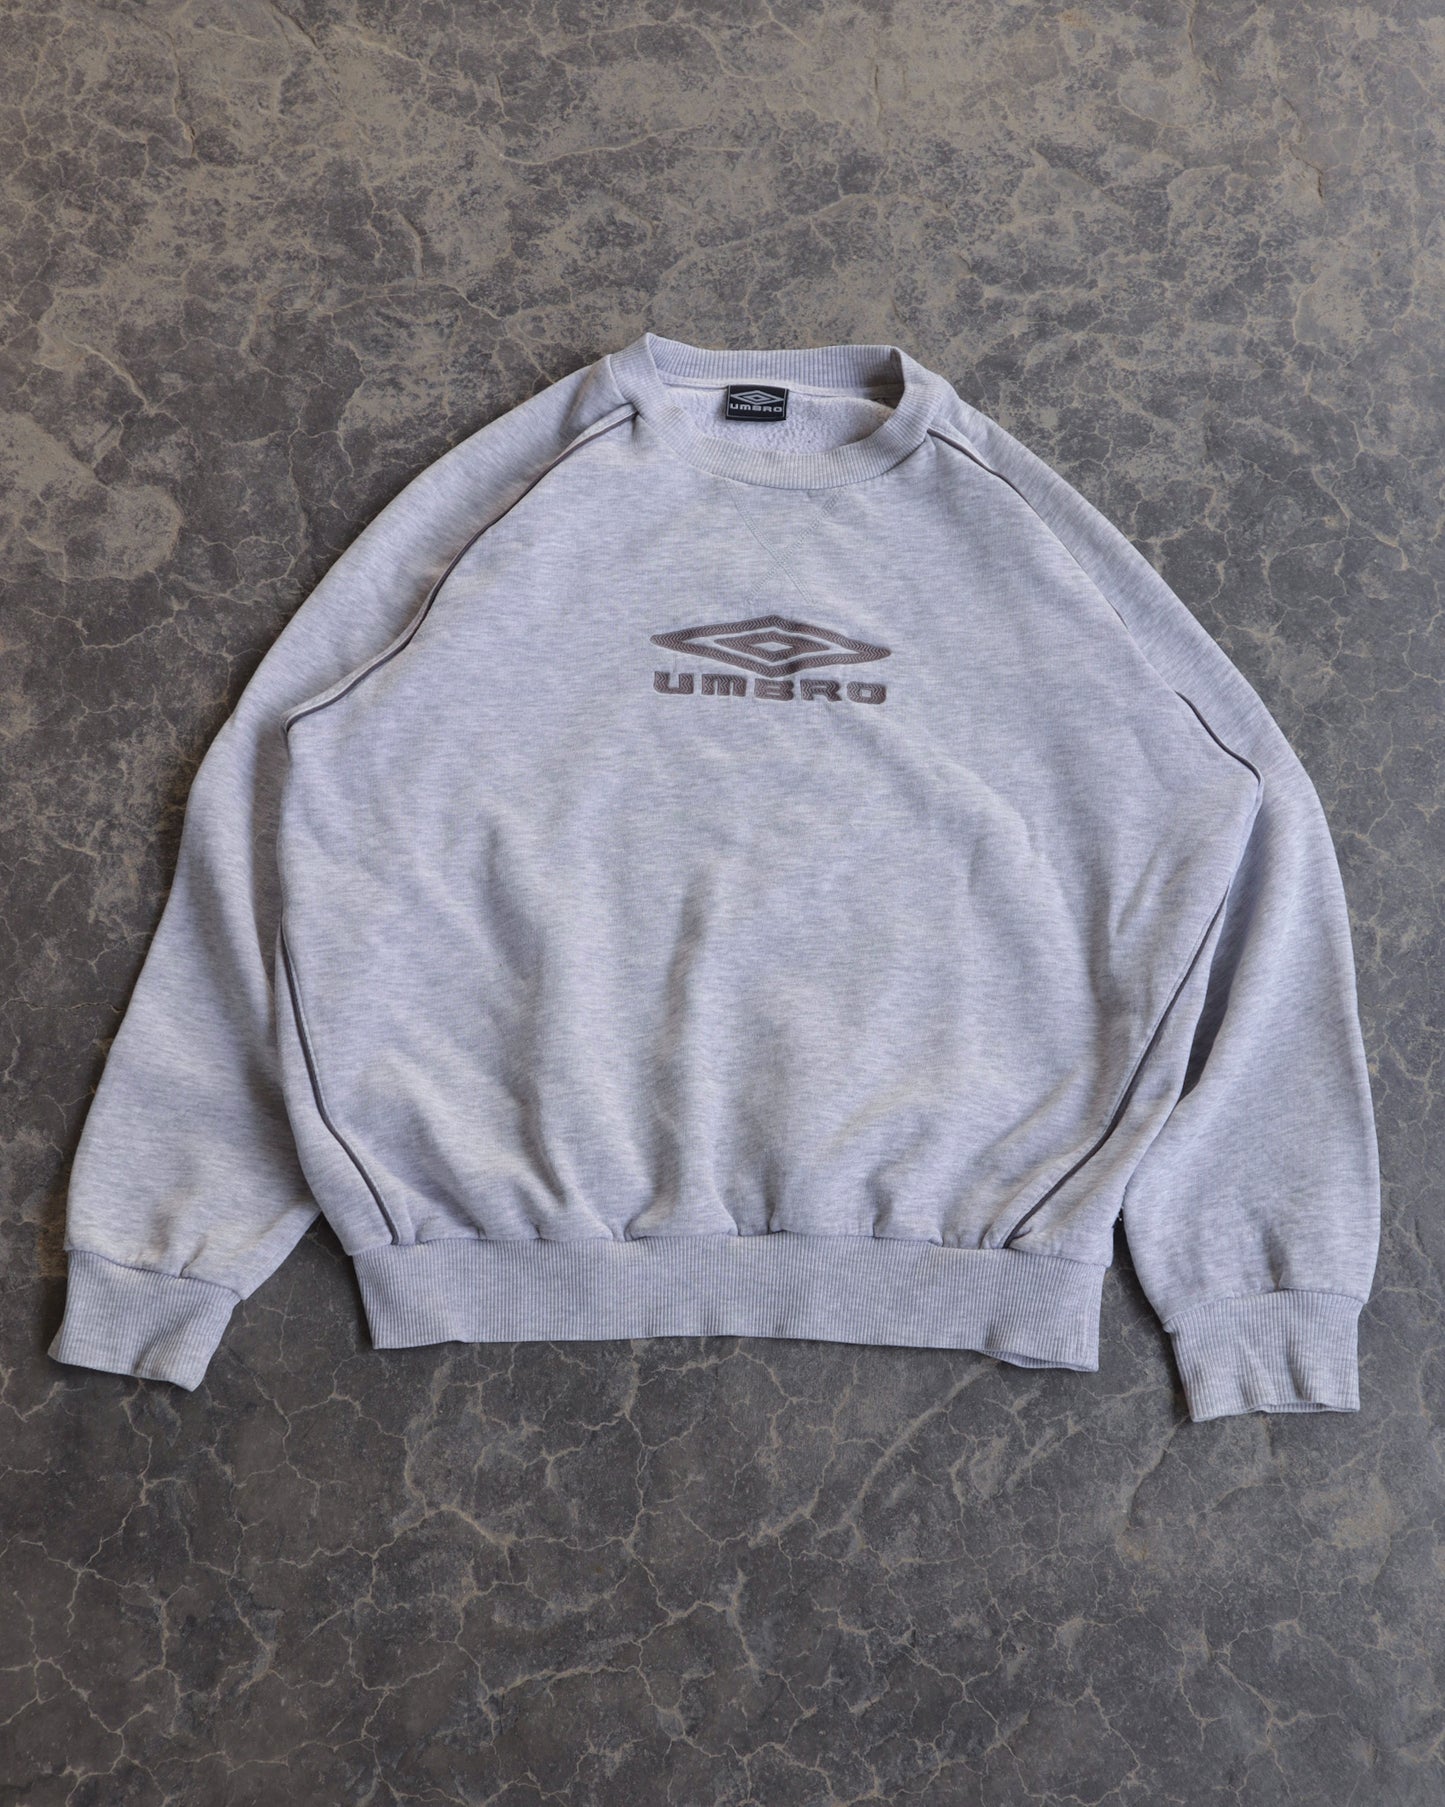 90s UMBRO Gray Crewneck Sweatshirt - XL